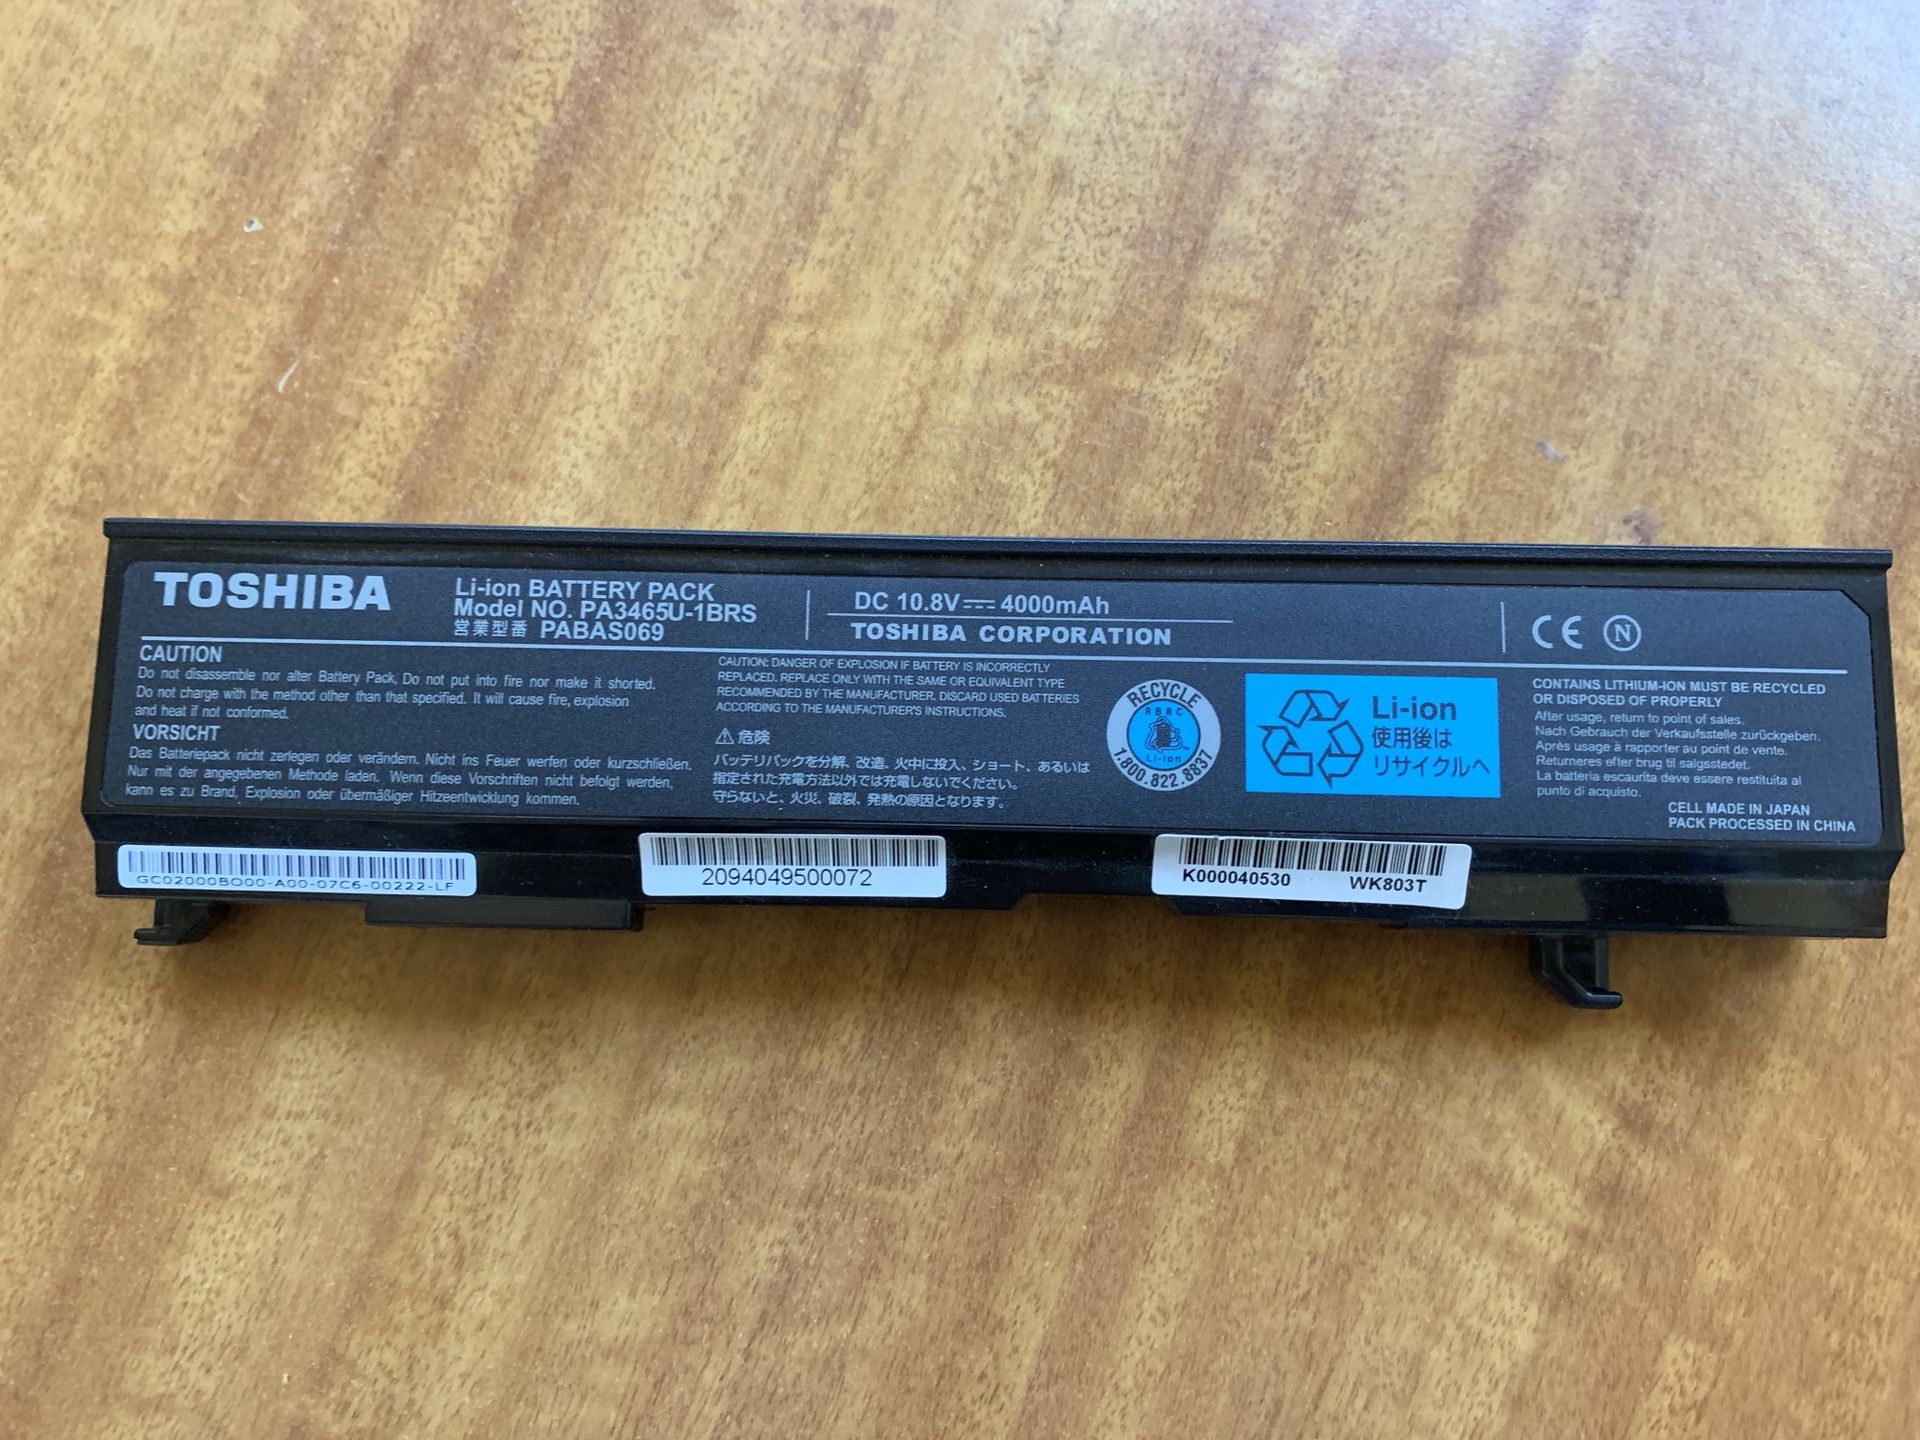 Toshiba laptop battery used model no PA3456U - 1BRS